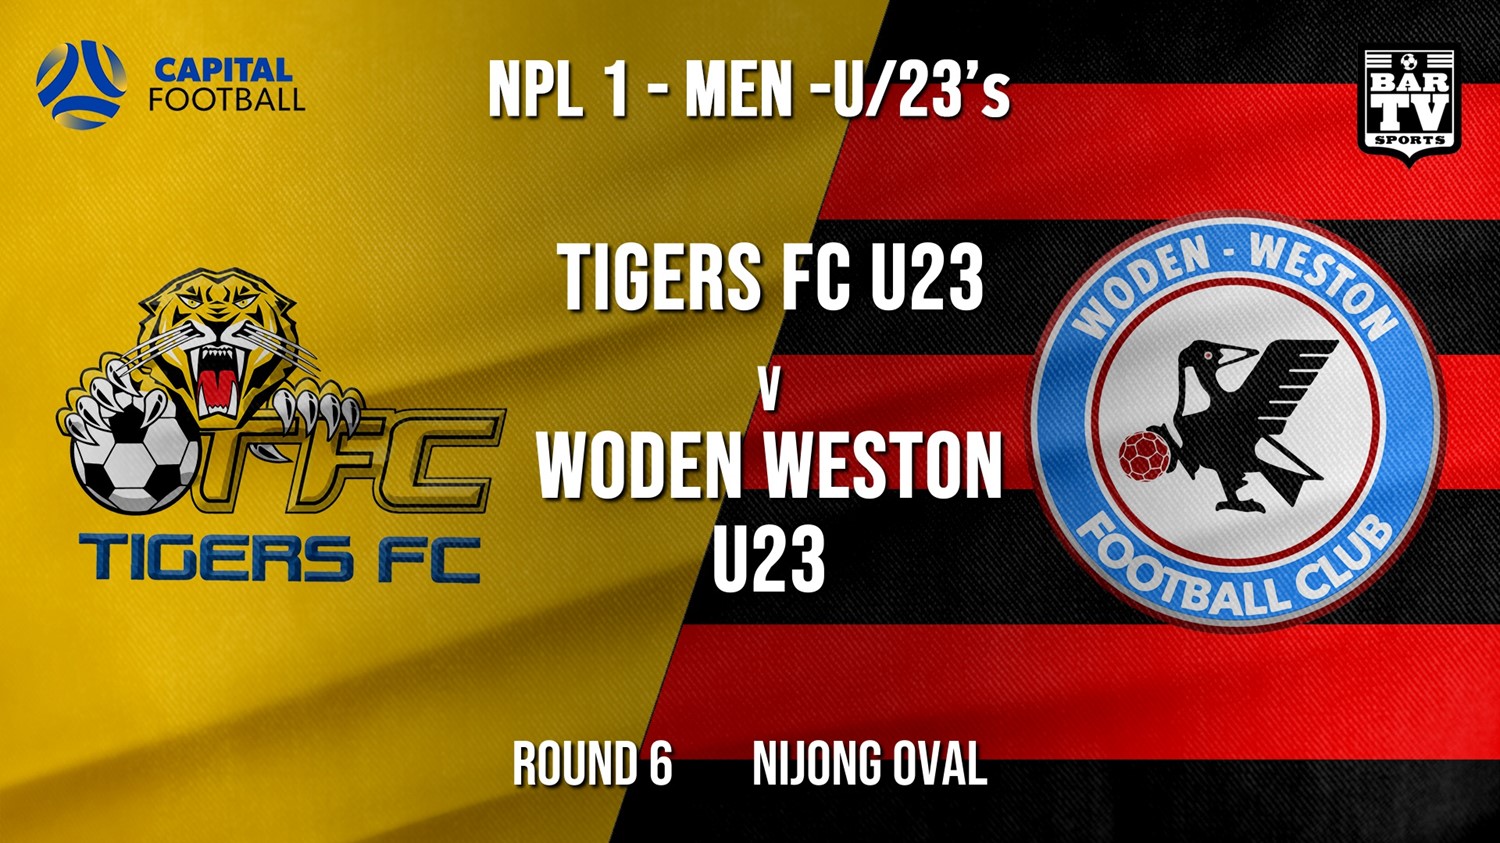 NPL1 Men - U23 - Capital Football  Round 6 - Tigers FC U23 v Woden Weston U23 Minigame Slate Image